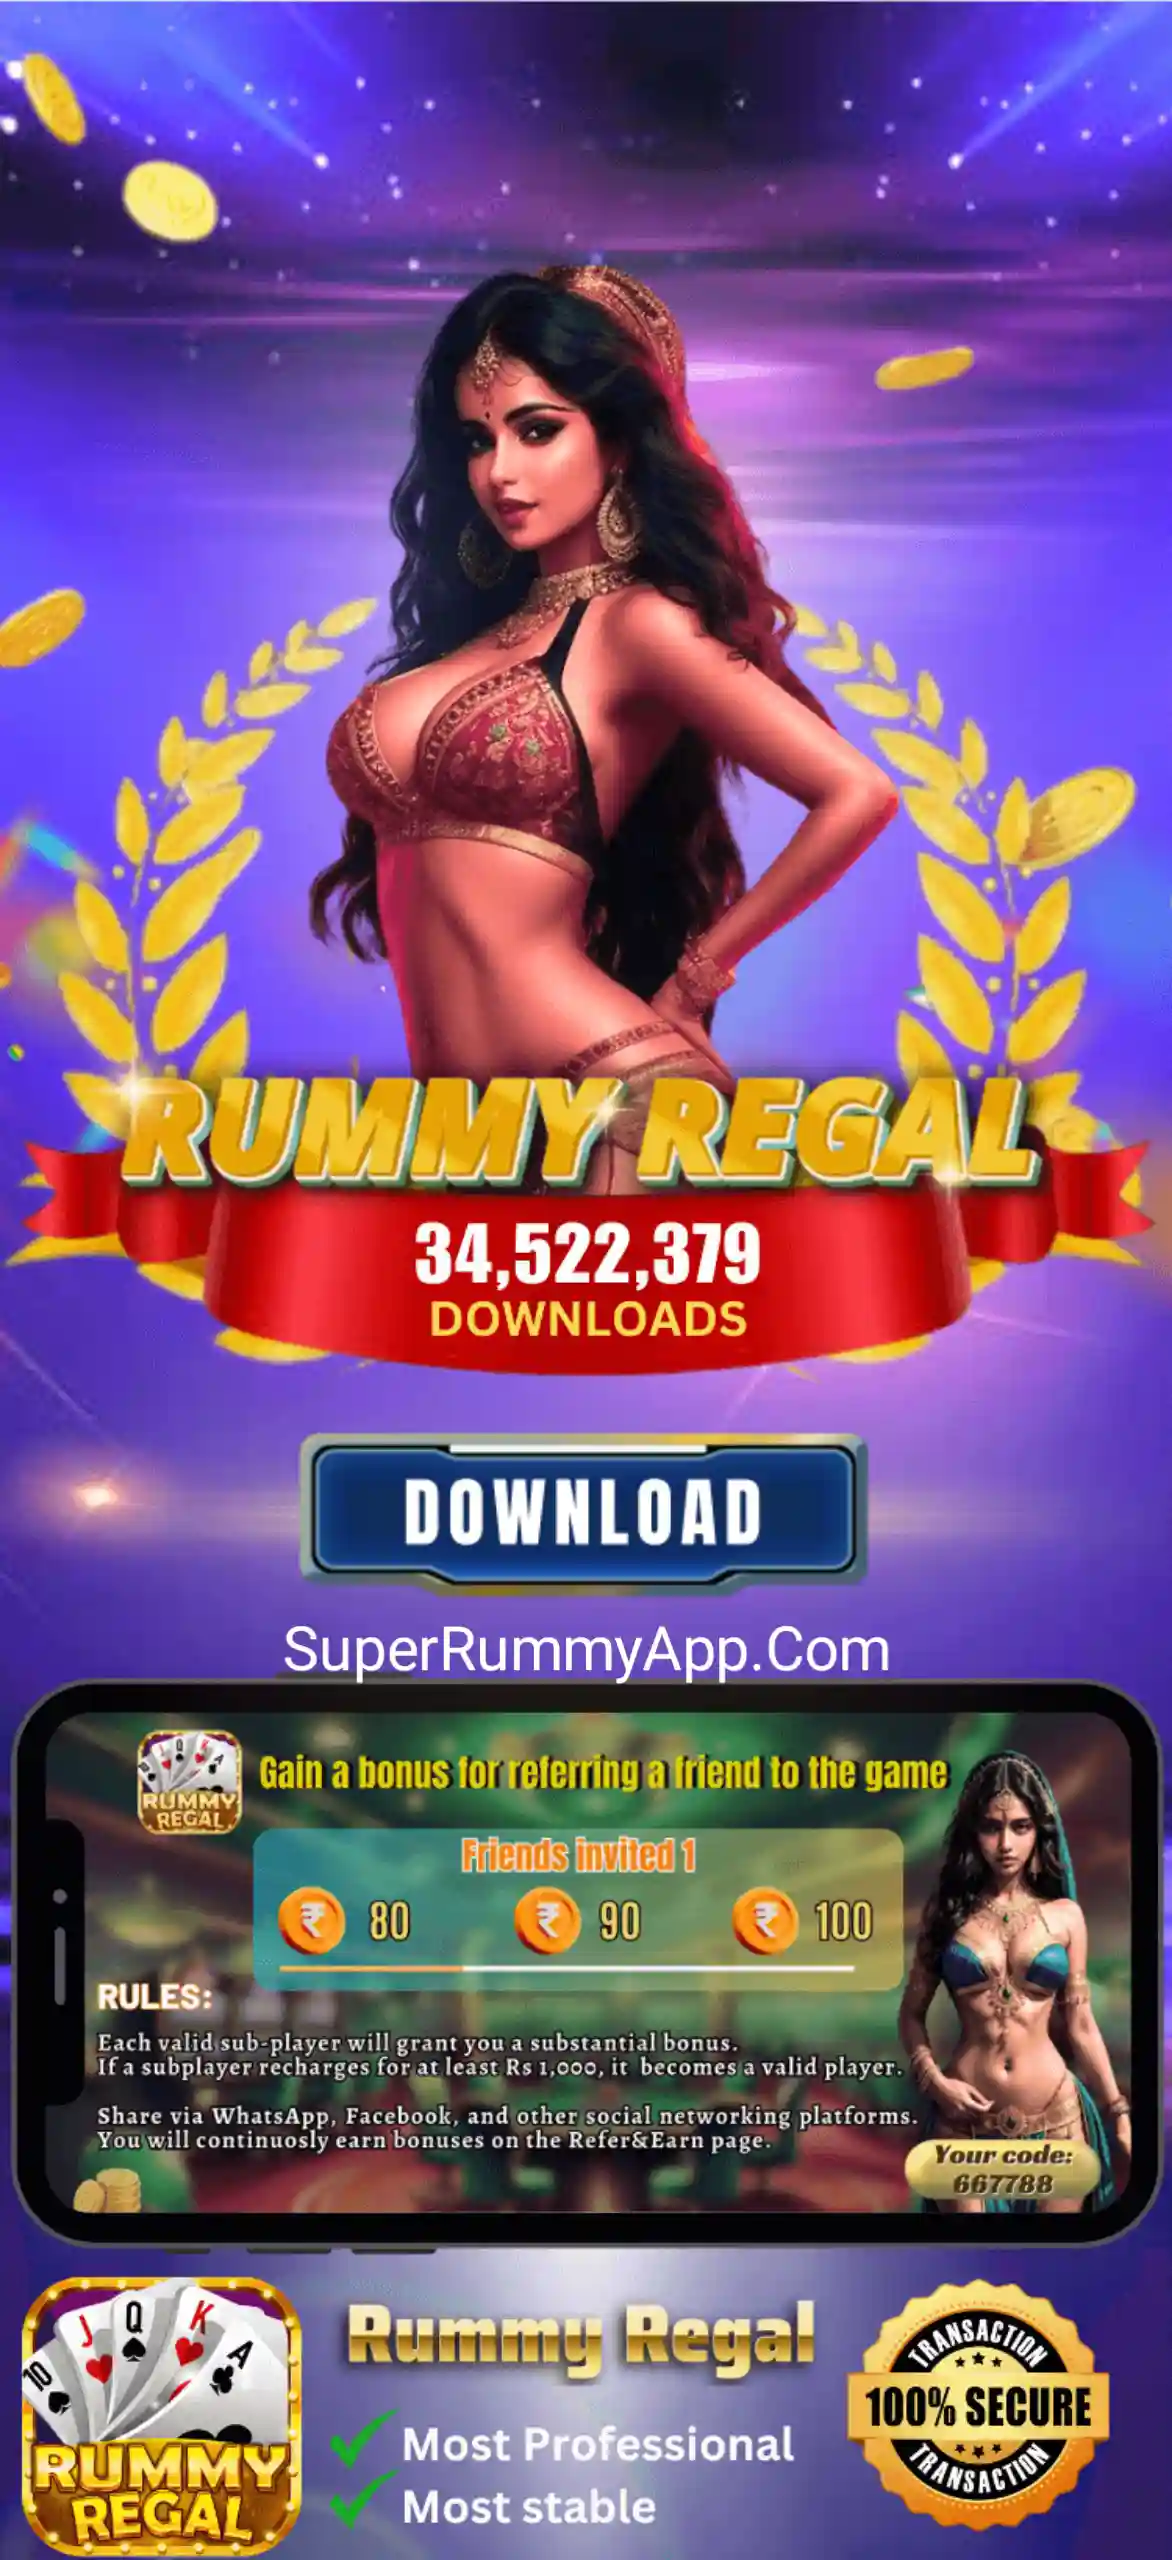 Rummy Regal Apk Download - Super Rummy App